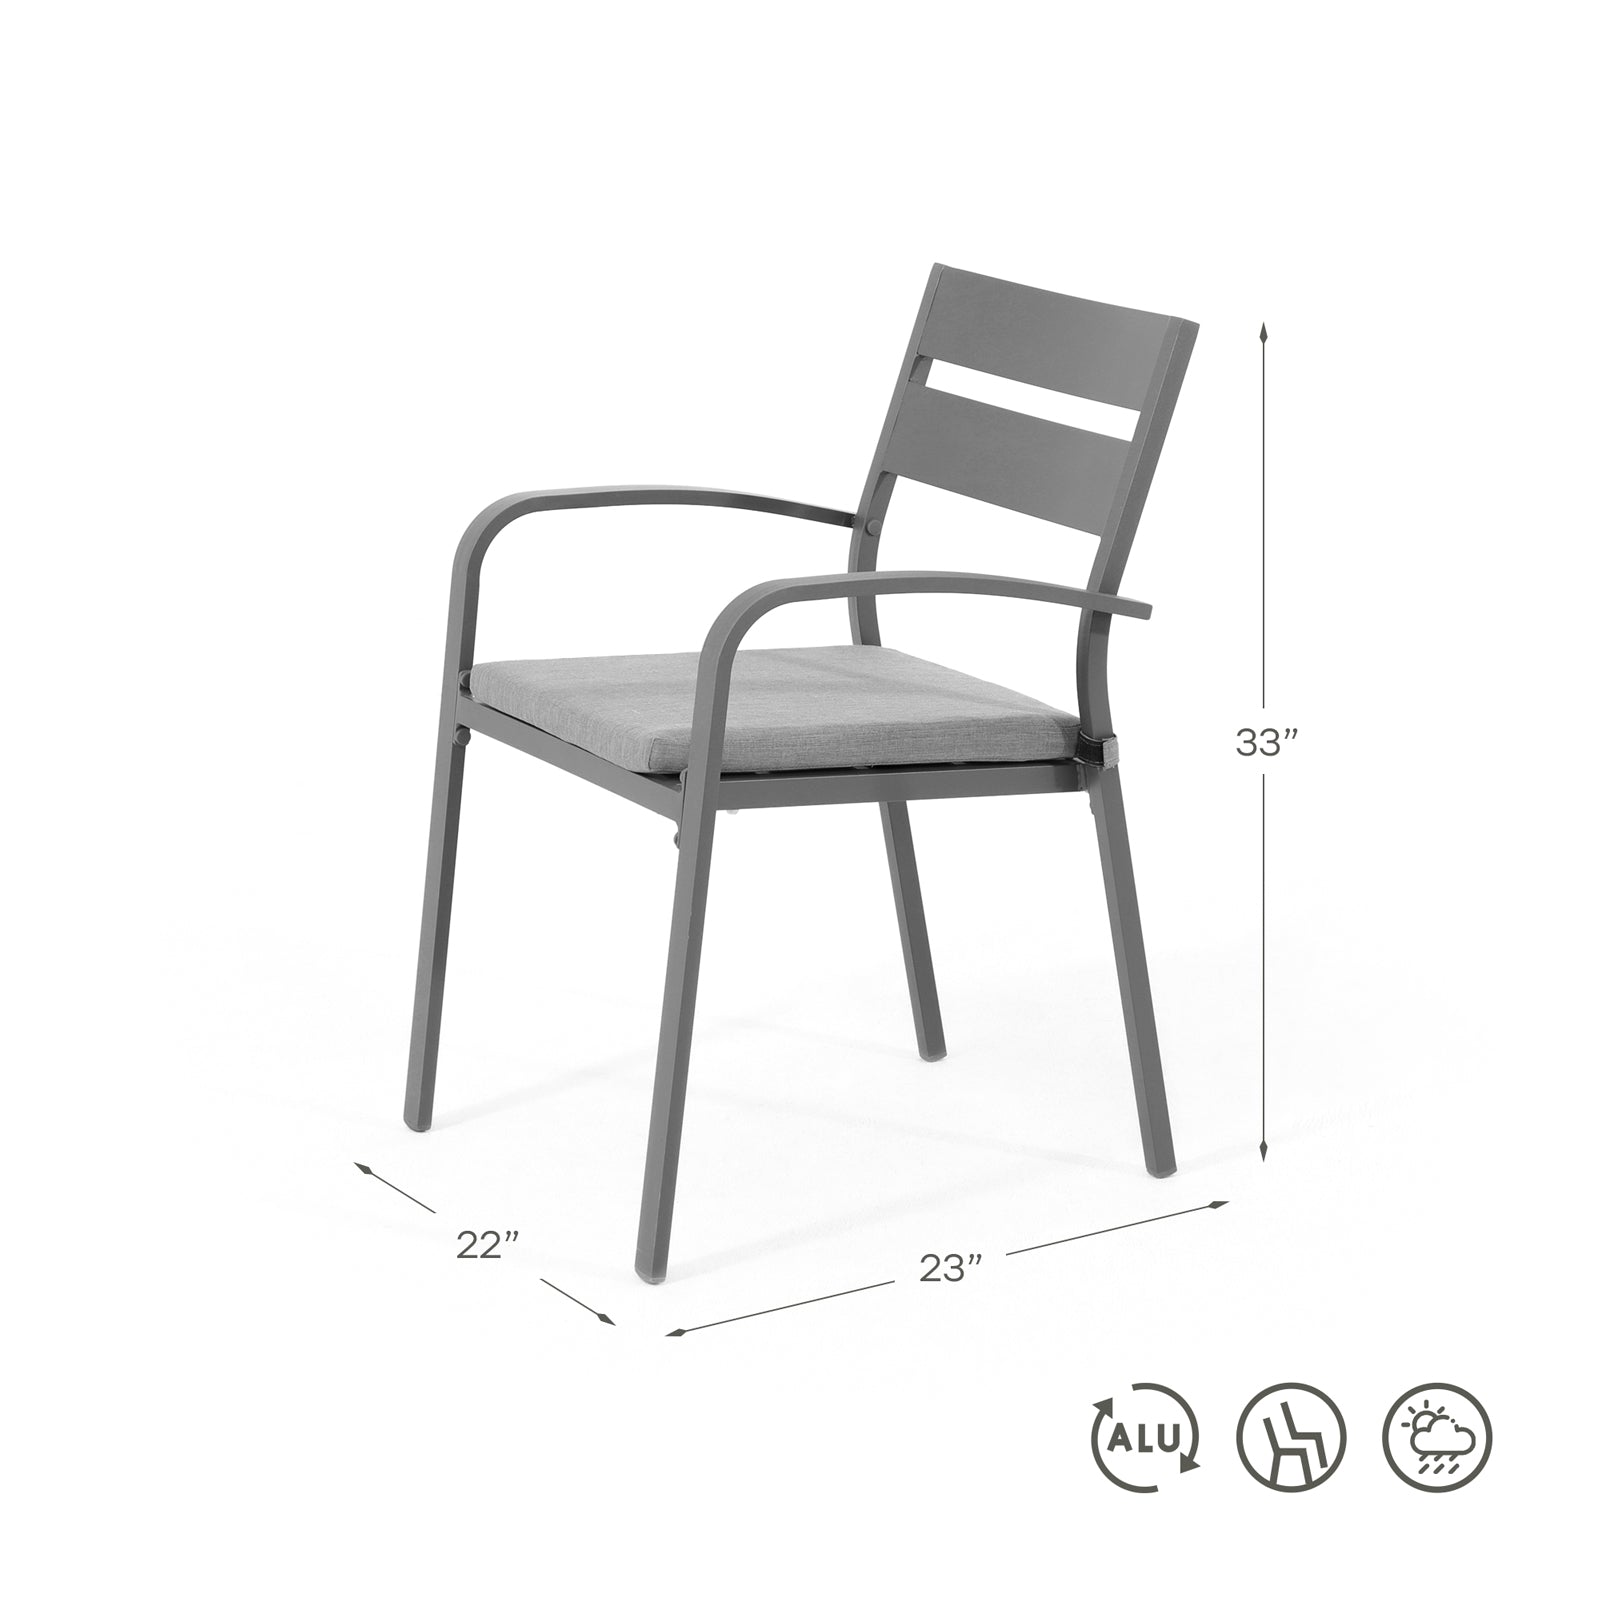 #color_Dark GreySalina Dark grey aluminum dining chair, grey cushion, dimension info,Jardina Furniture#color_Dark Grey